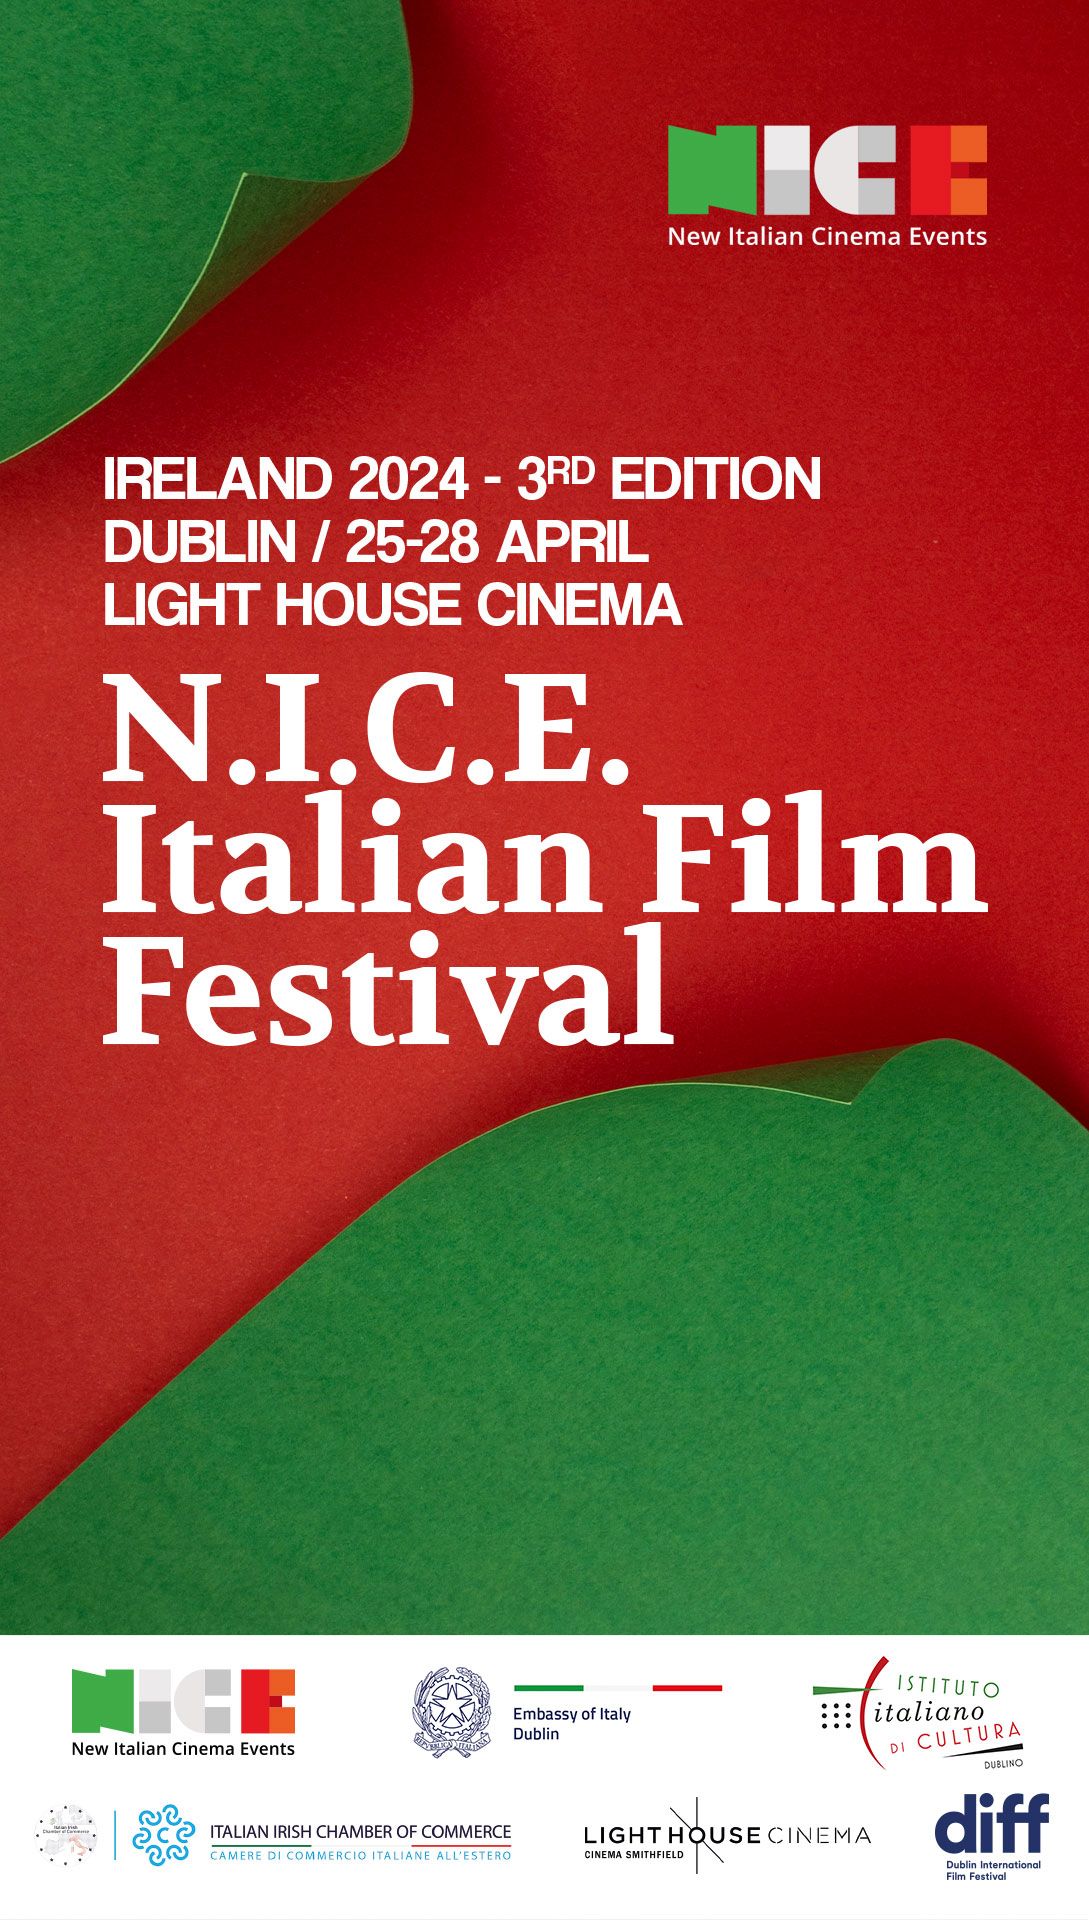 N.I.C.E. Italian Film Festival